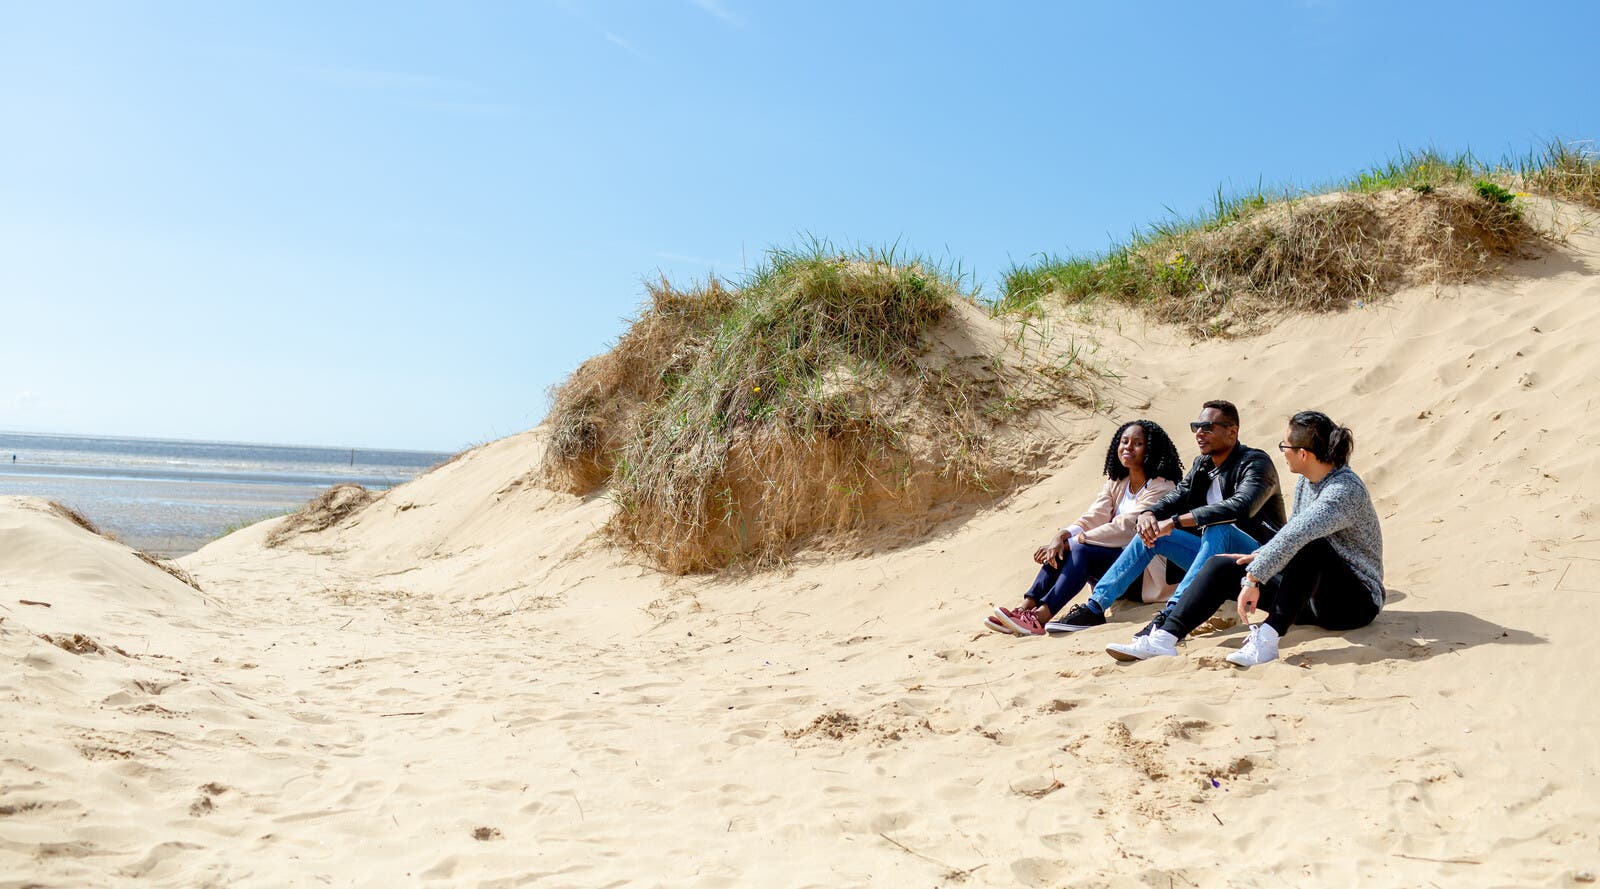 Students sat on a beach